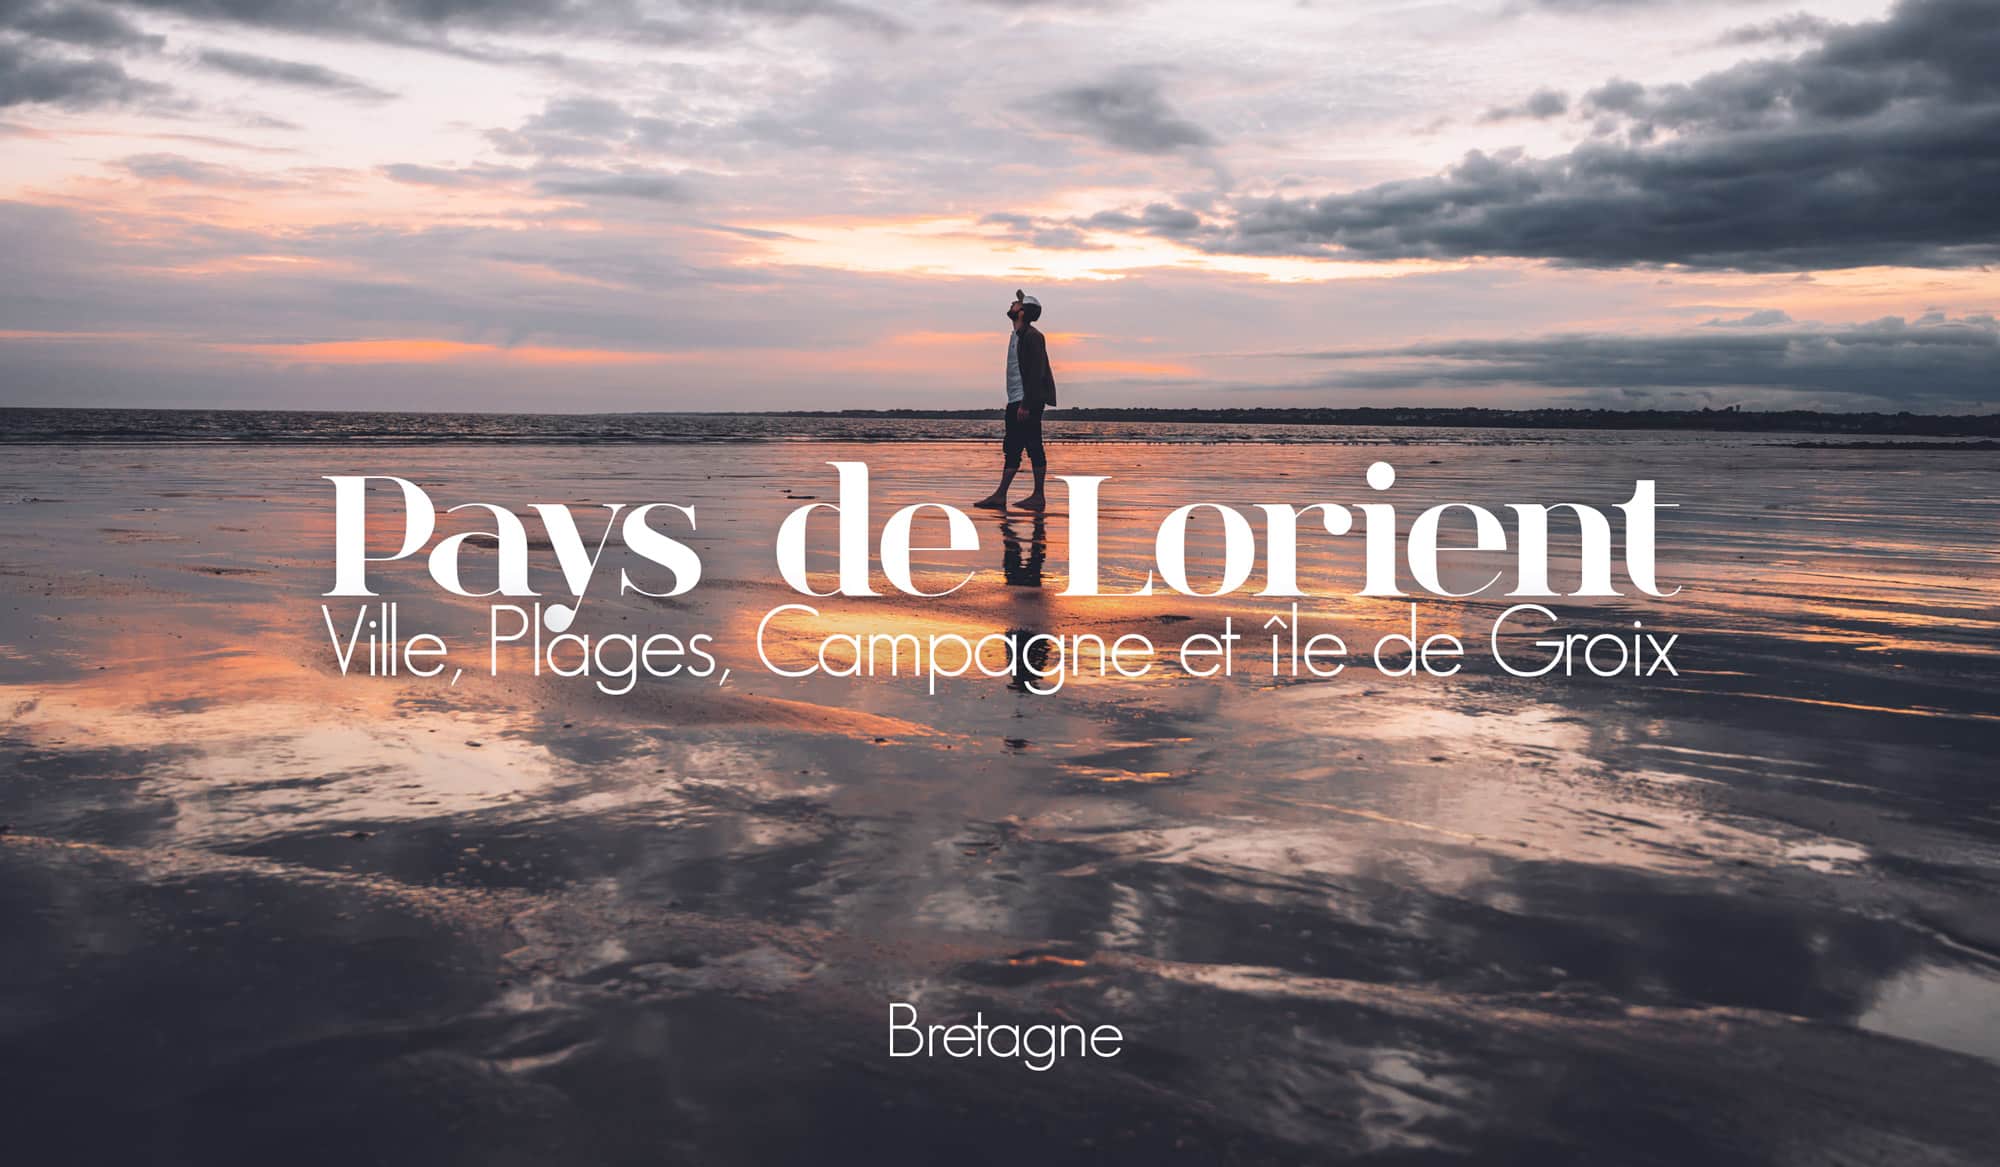 Lorient et Ile de Groix, Bestjobers Blog Voyage